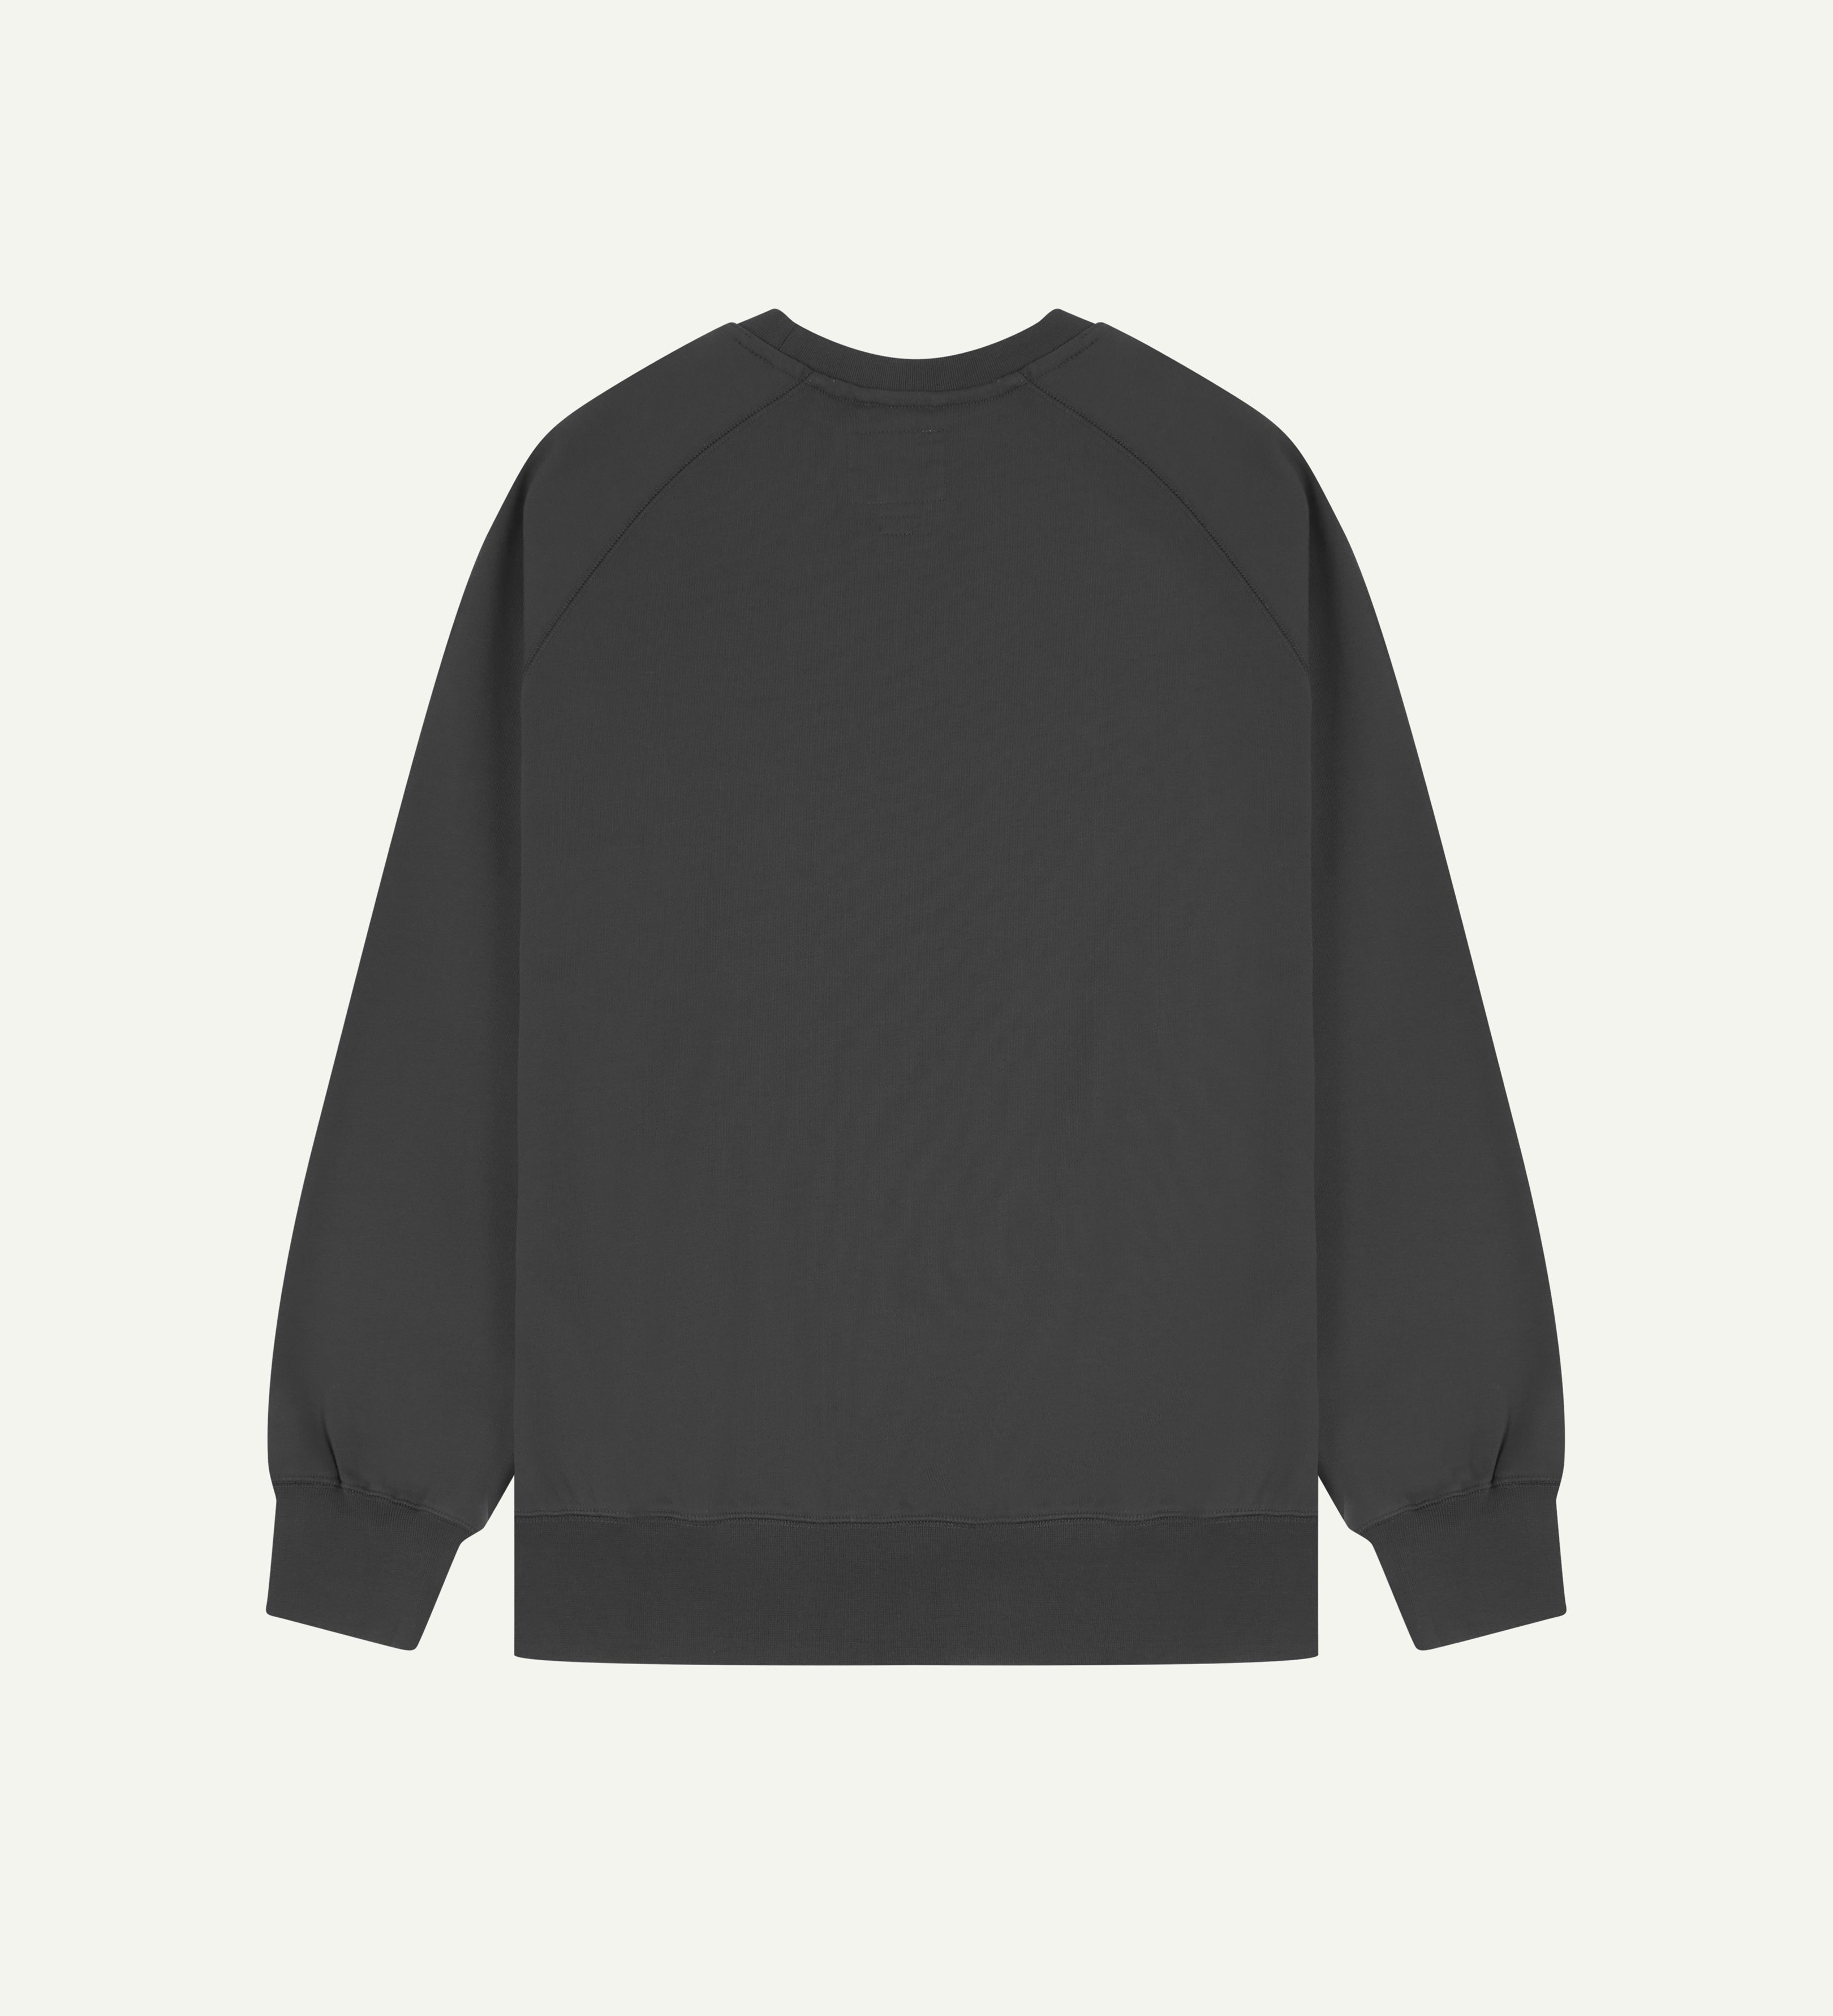 Back view of men's dark grey organic heavyweight cotton #7005 jersey sweatshirt by Uskees